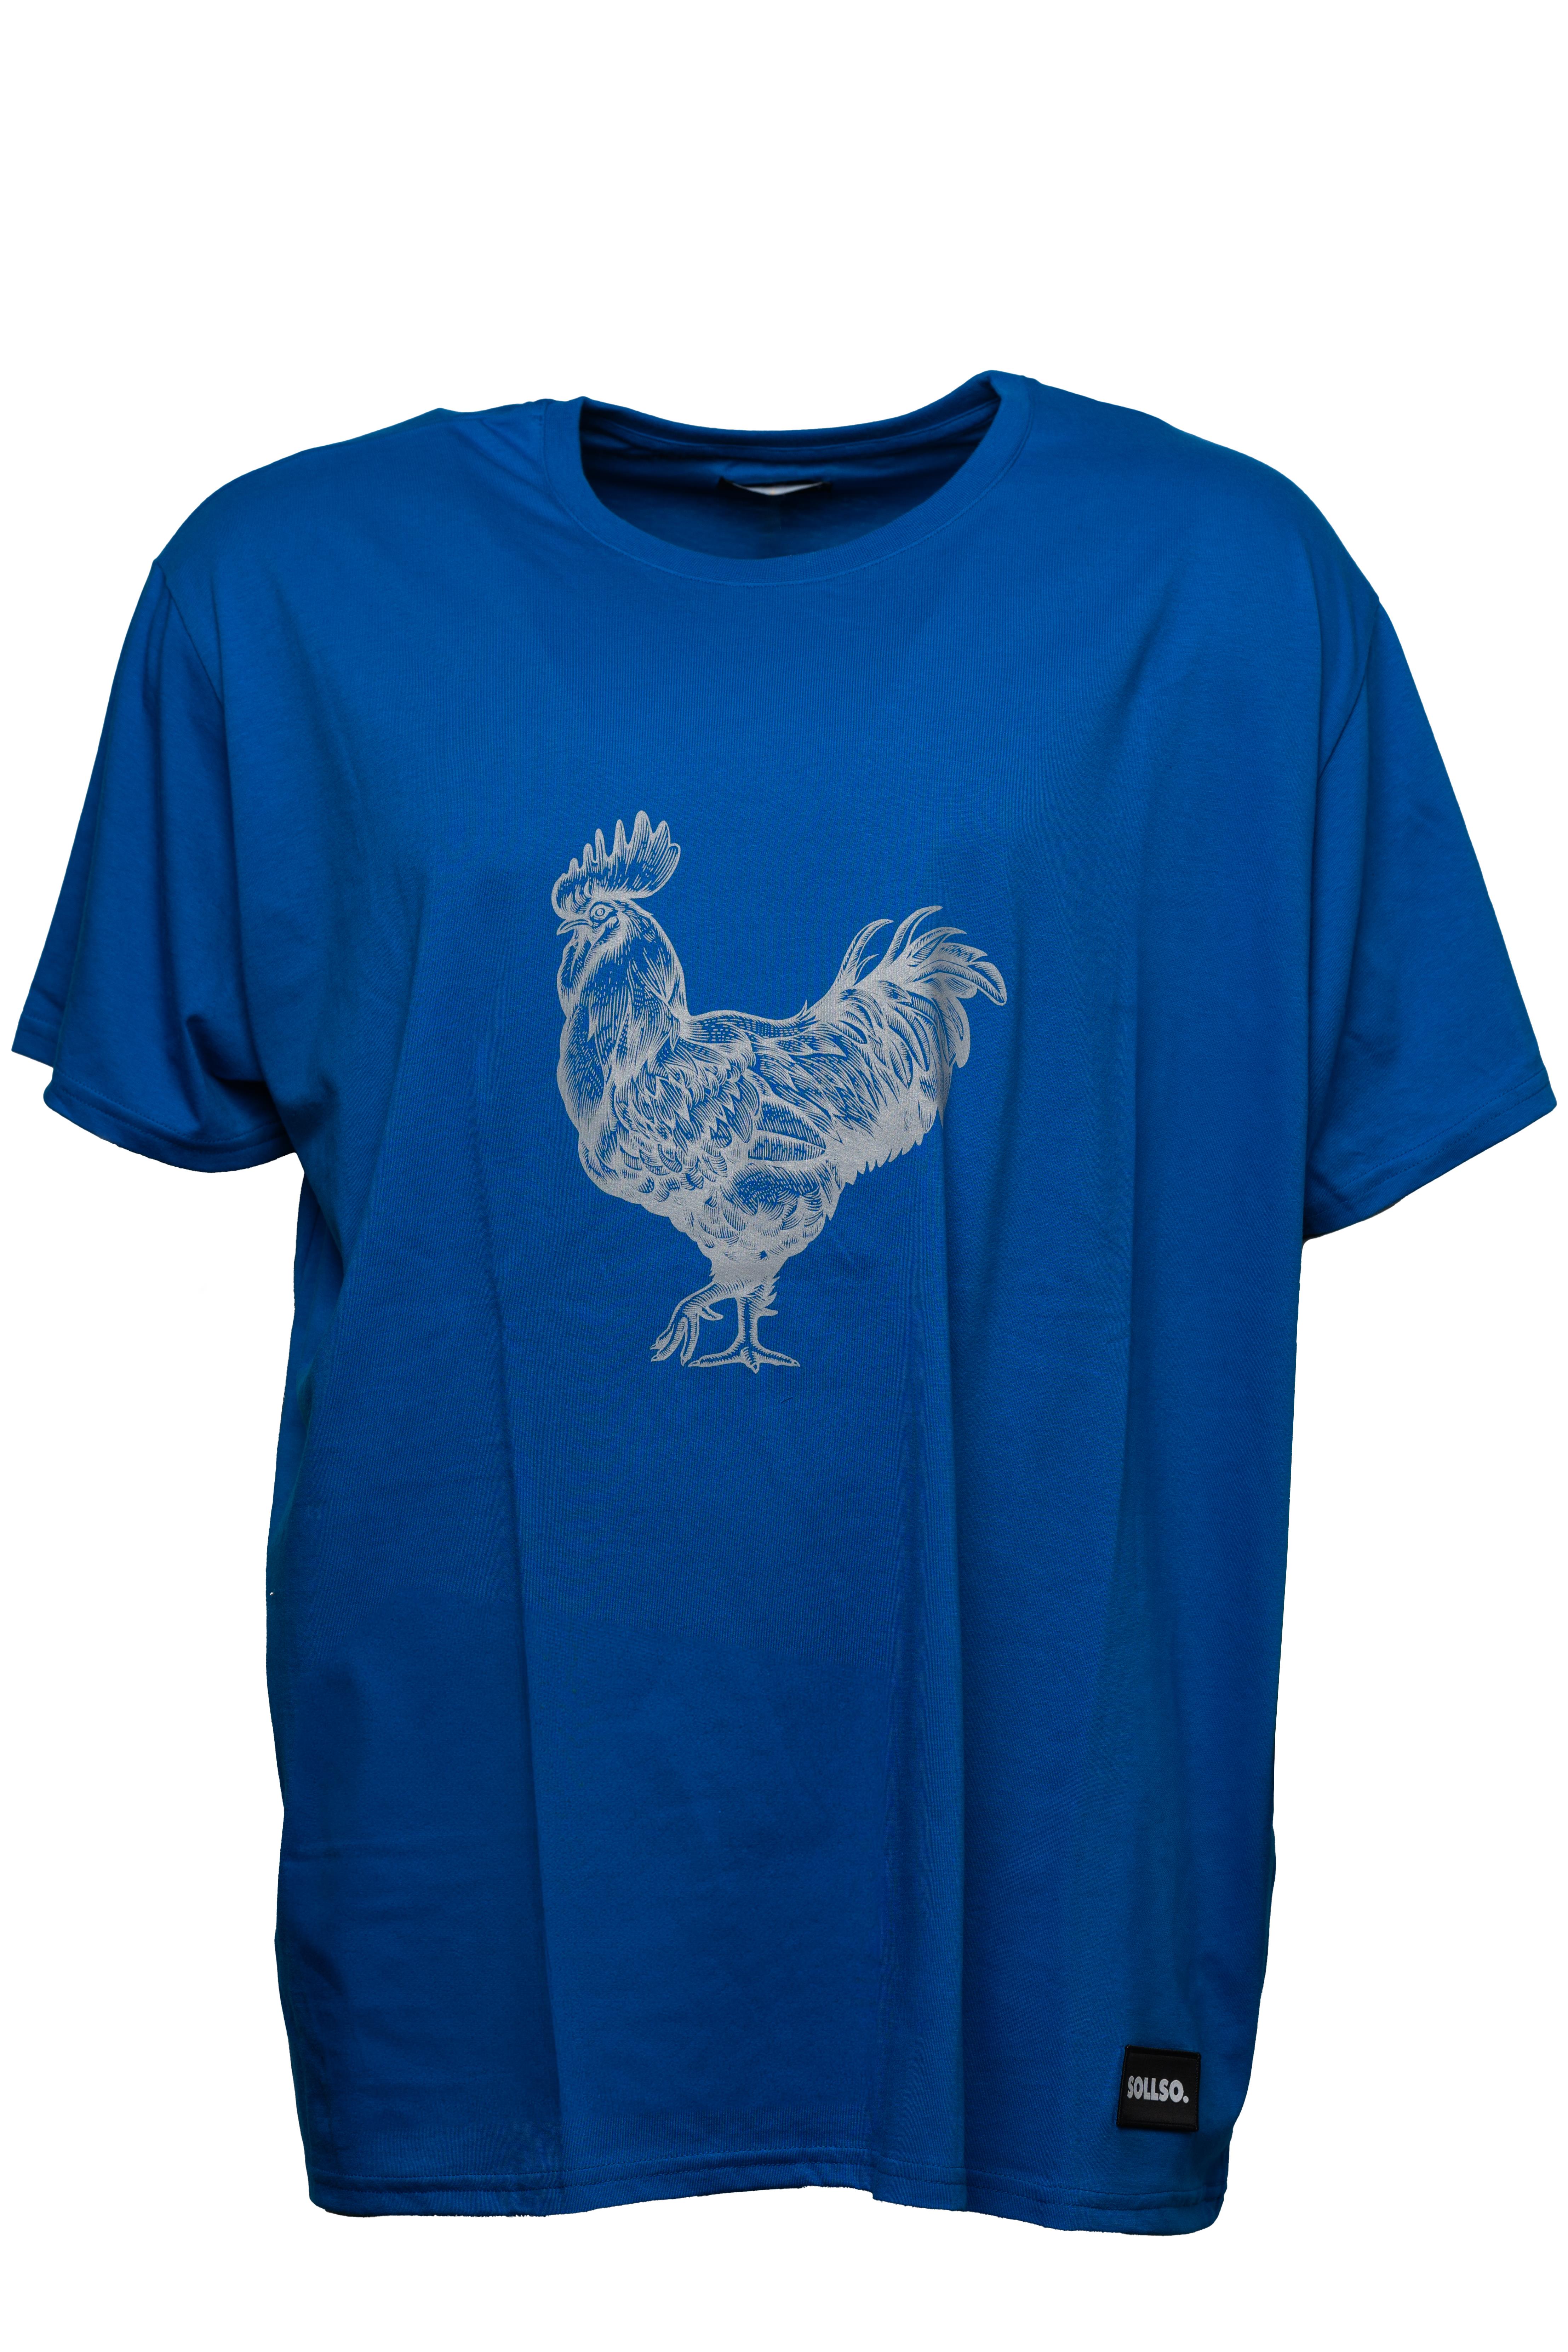 SOLLSO. T-Shirt "Rooster", Farbe Ocean Blue, Größe 10XL